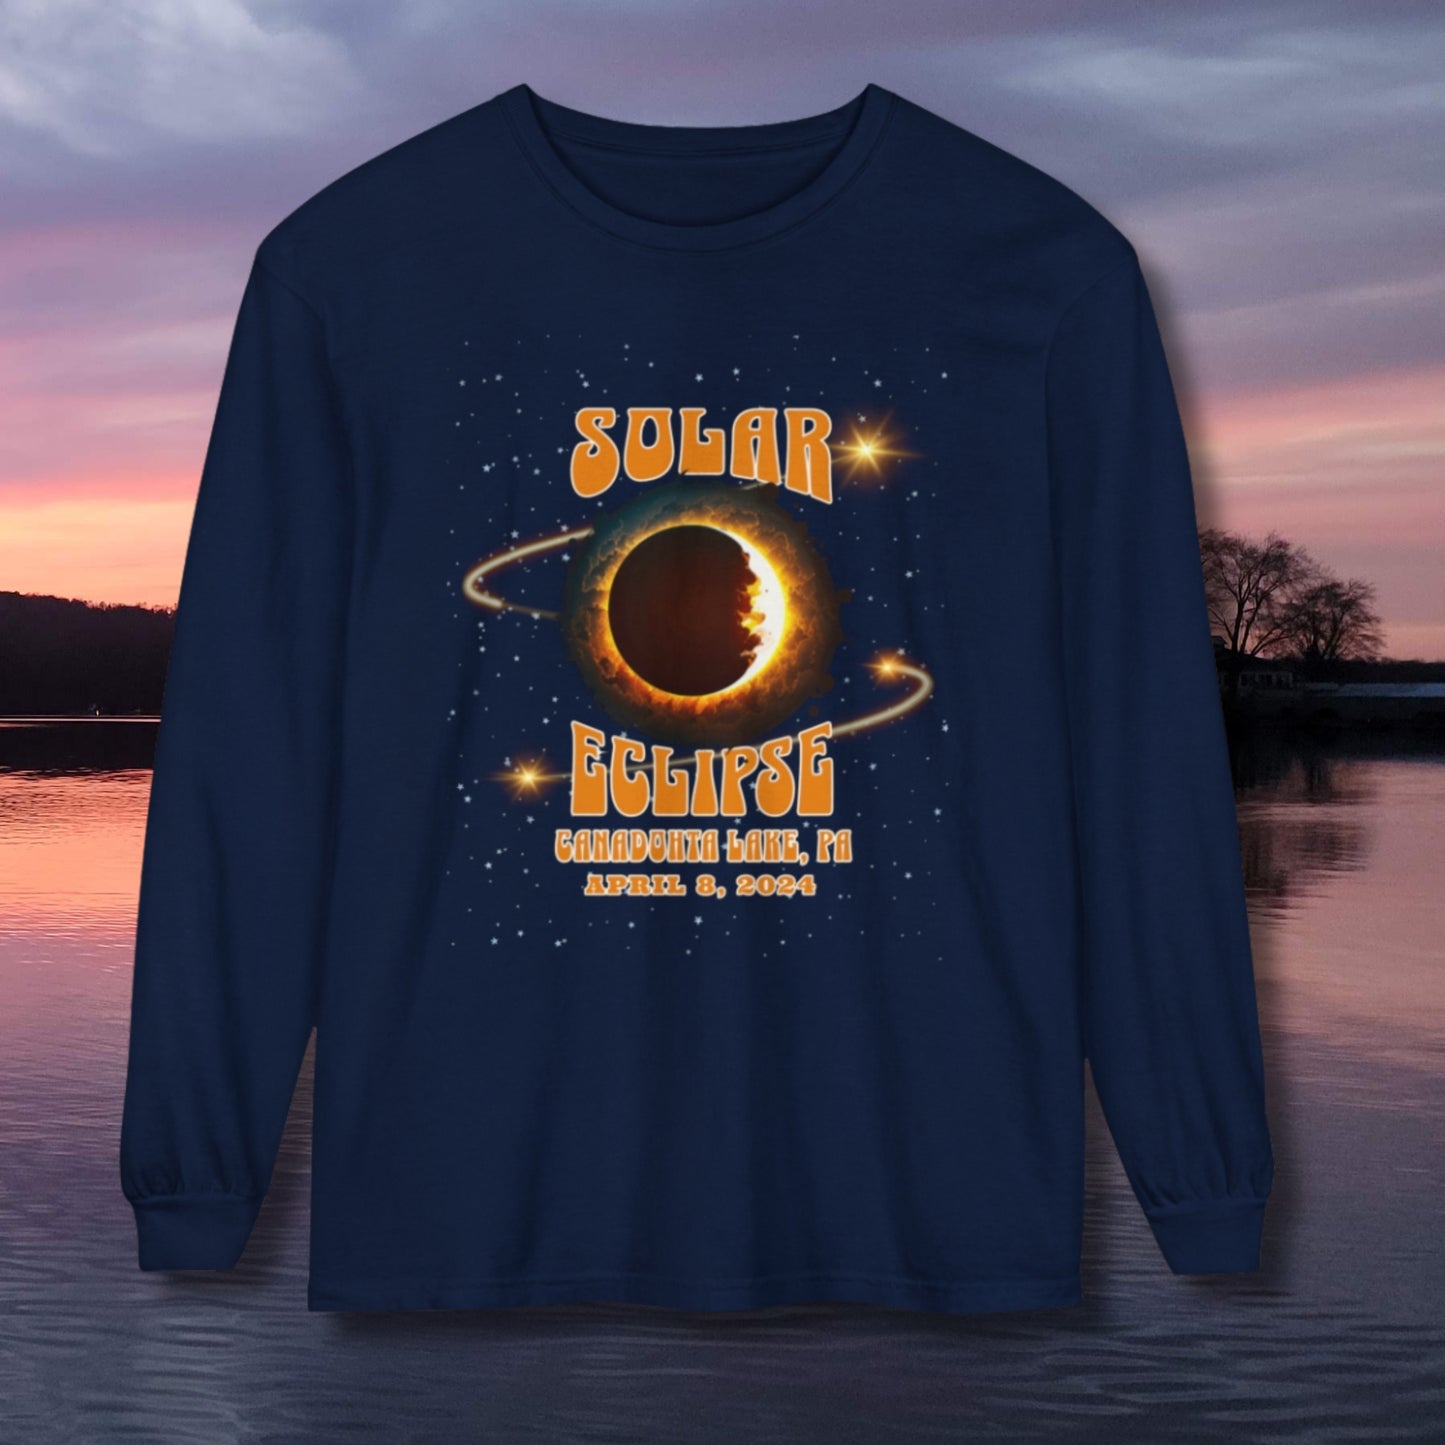 Solar Eclipse 2024 Canadohta Lake Long Sleeve T-Shirt